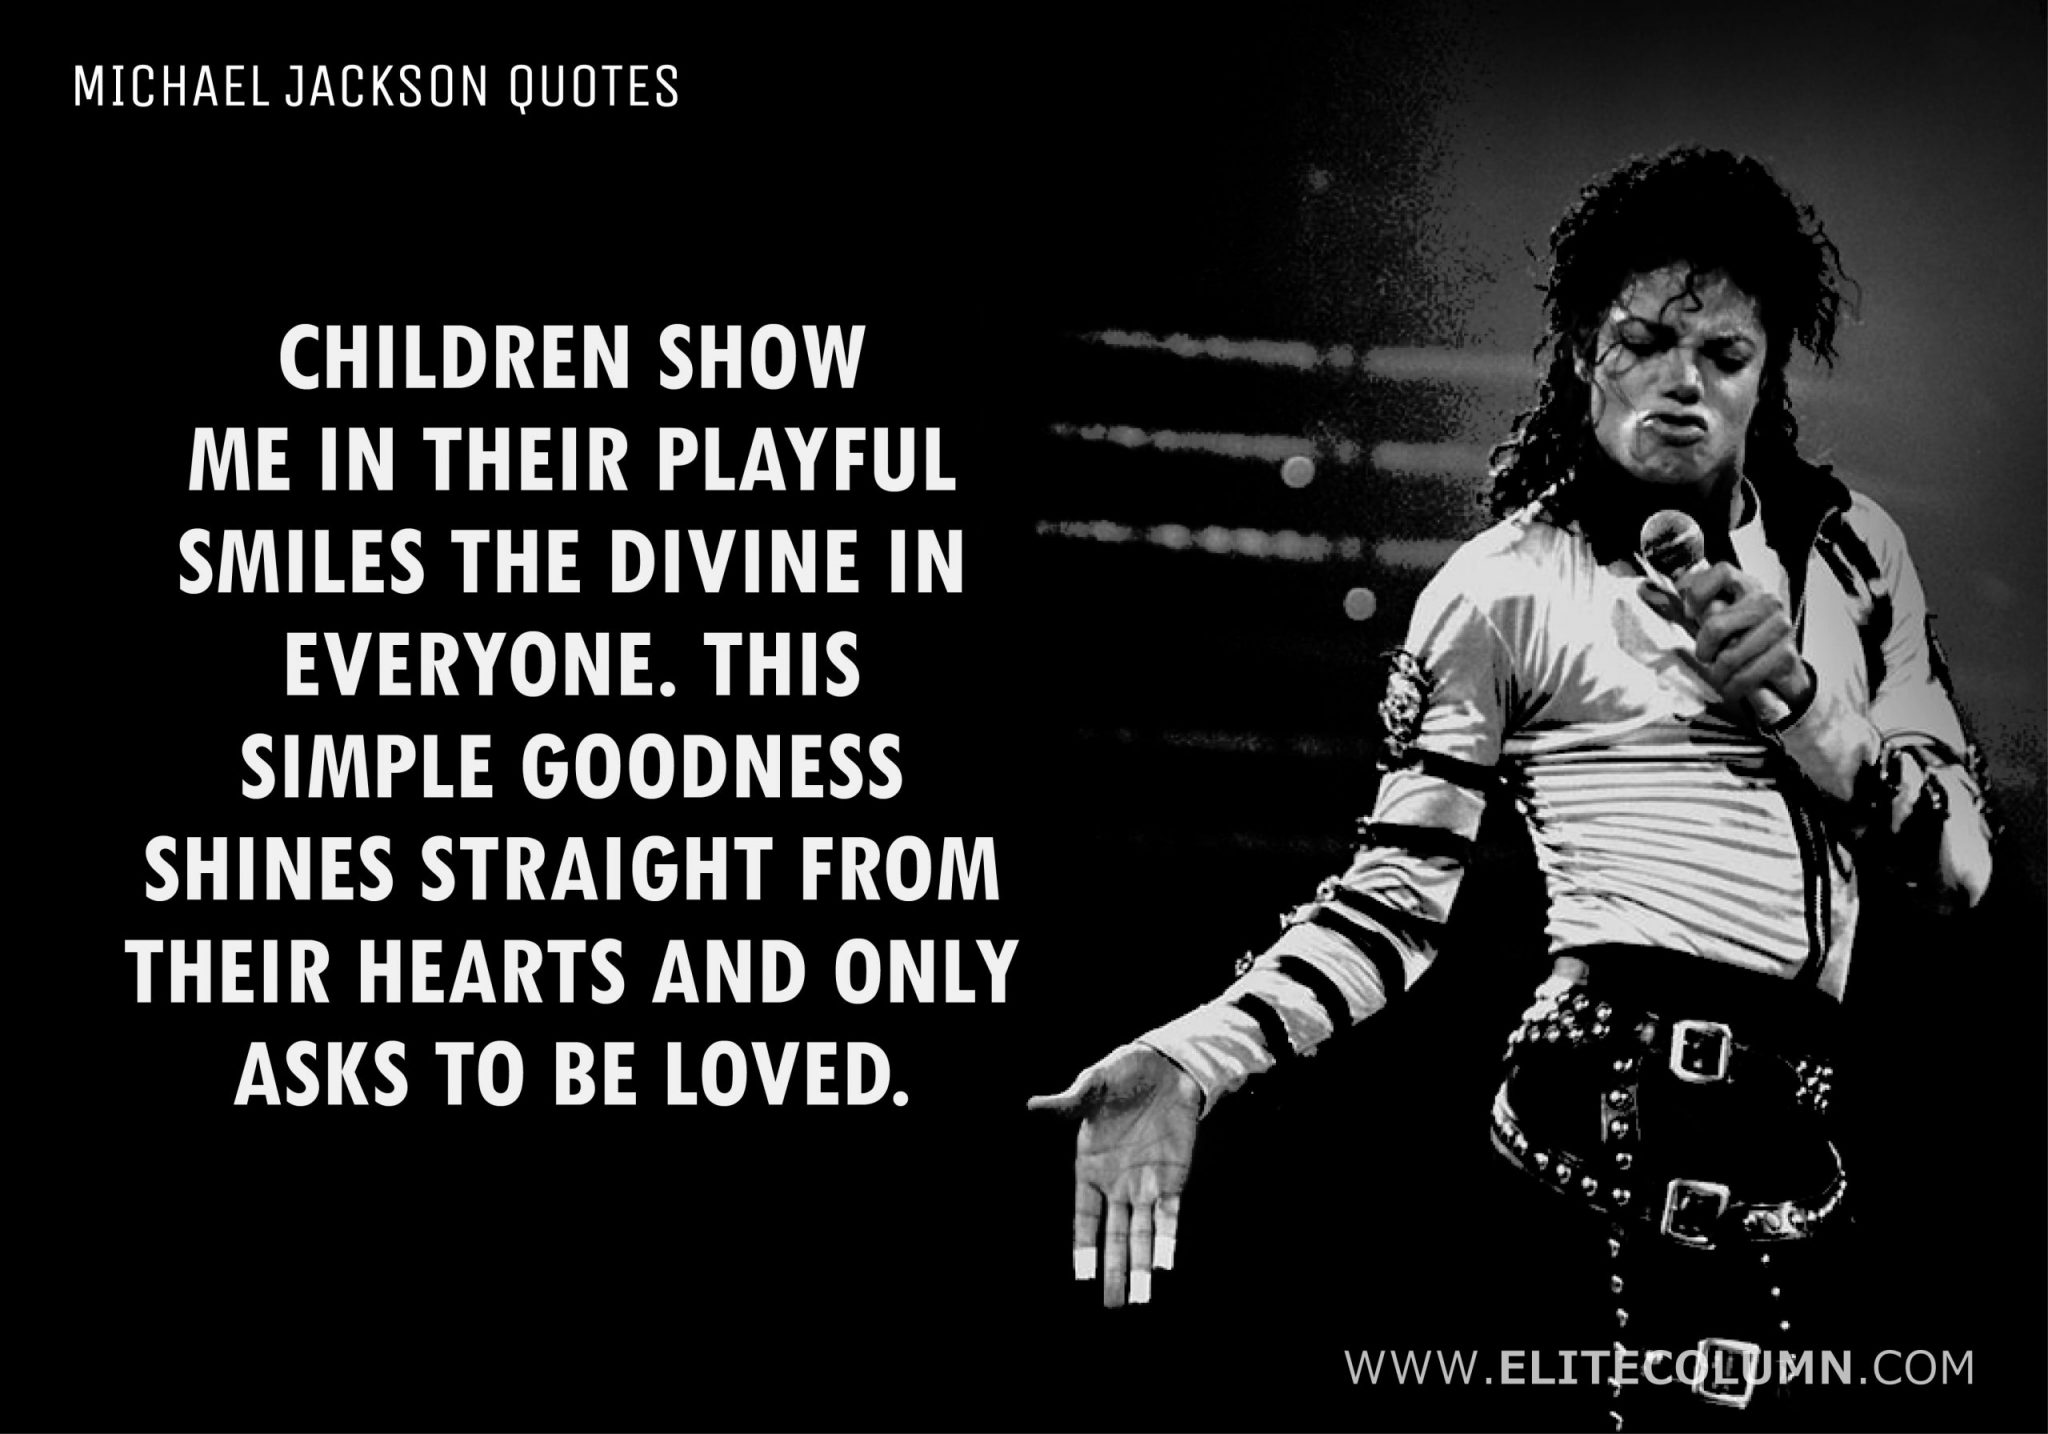 Michael Jackson Quotes (4)